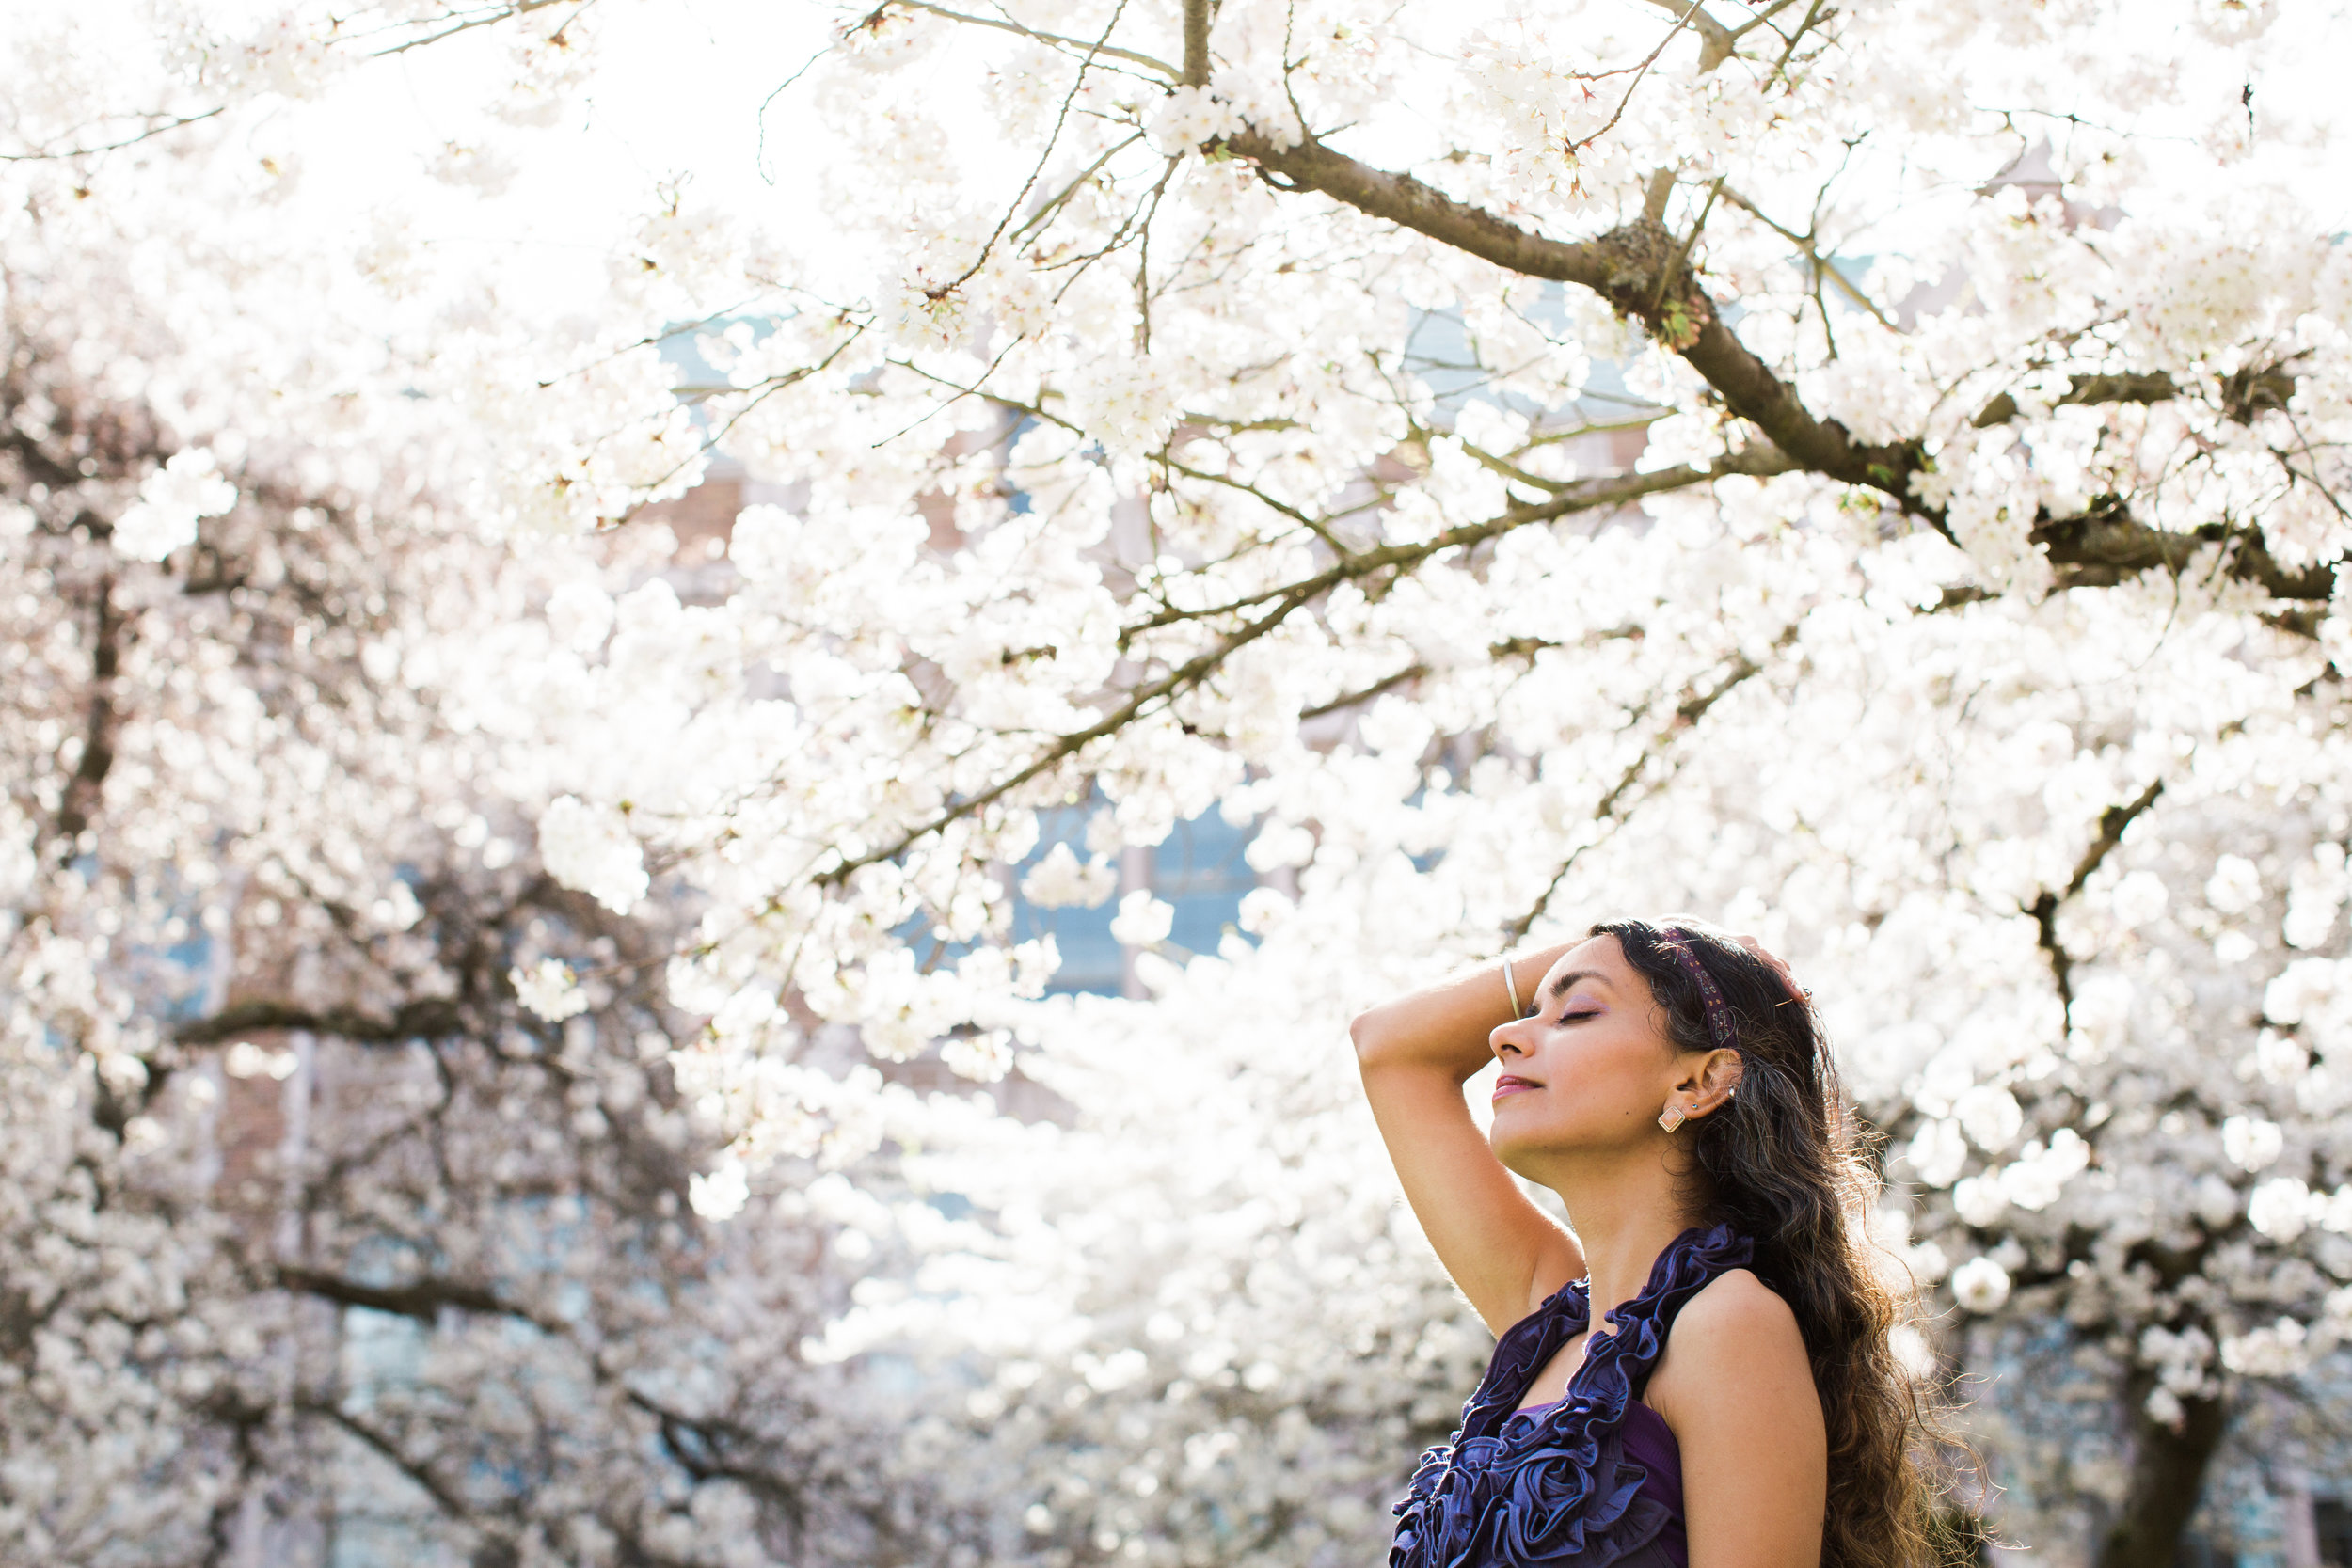 sufience-harkirat-university of washington-cherry blossom-portrait session-seattle photographer janelle elaine photography-1-3.jpg